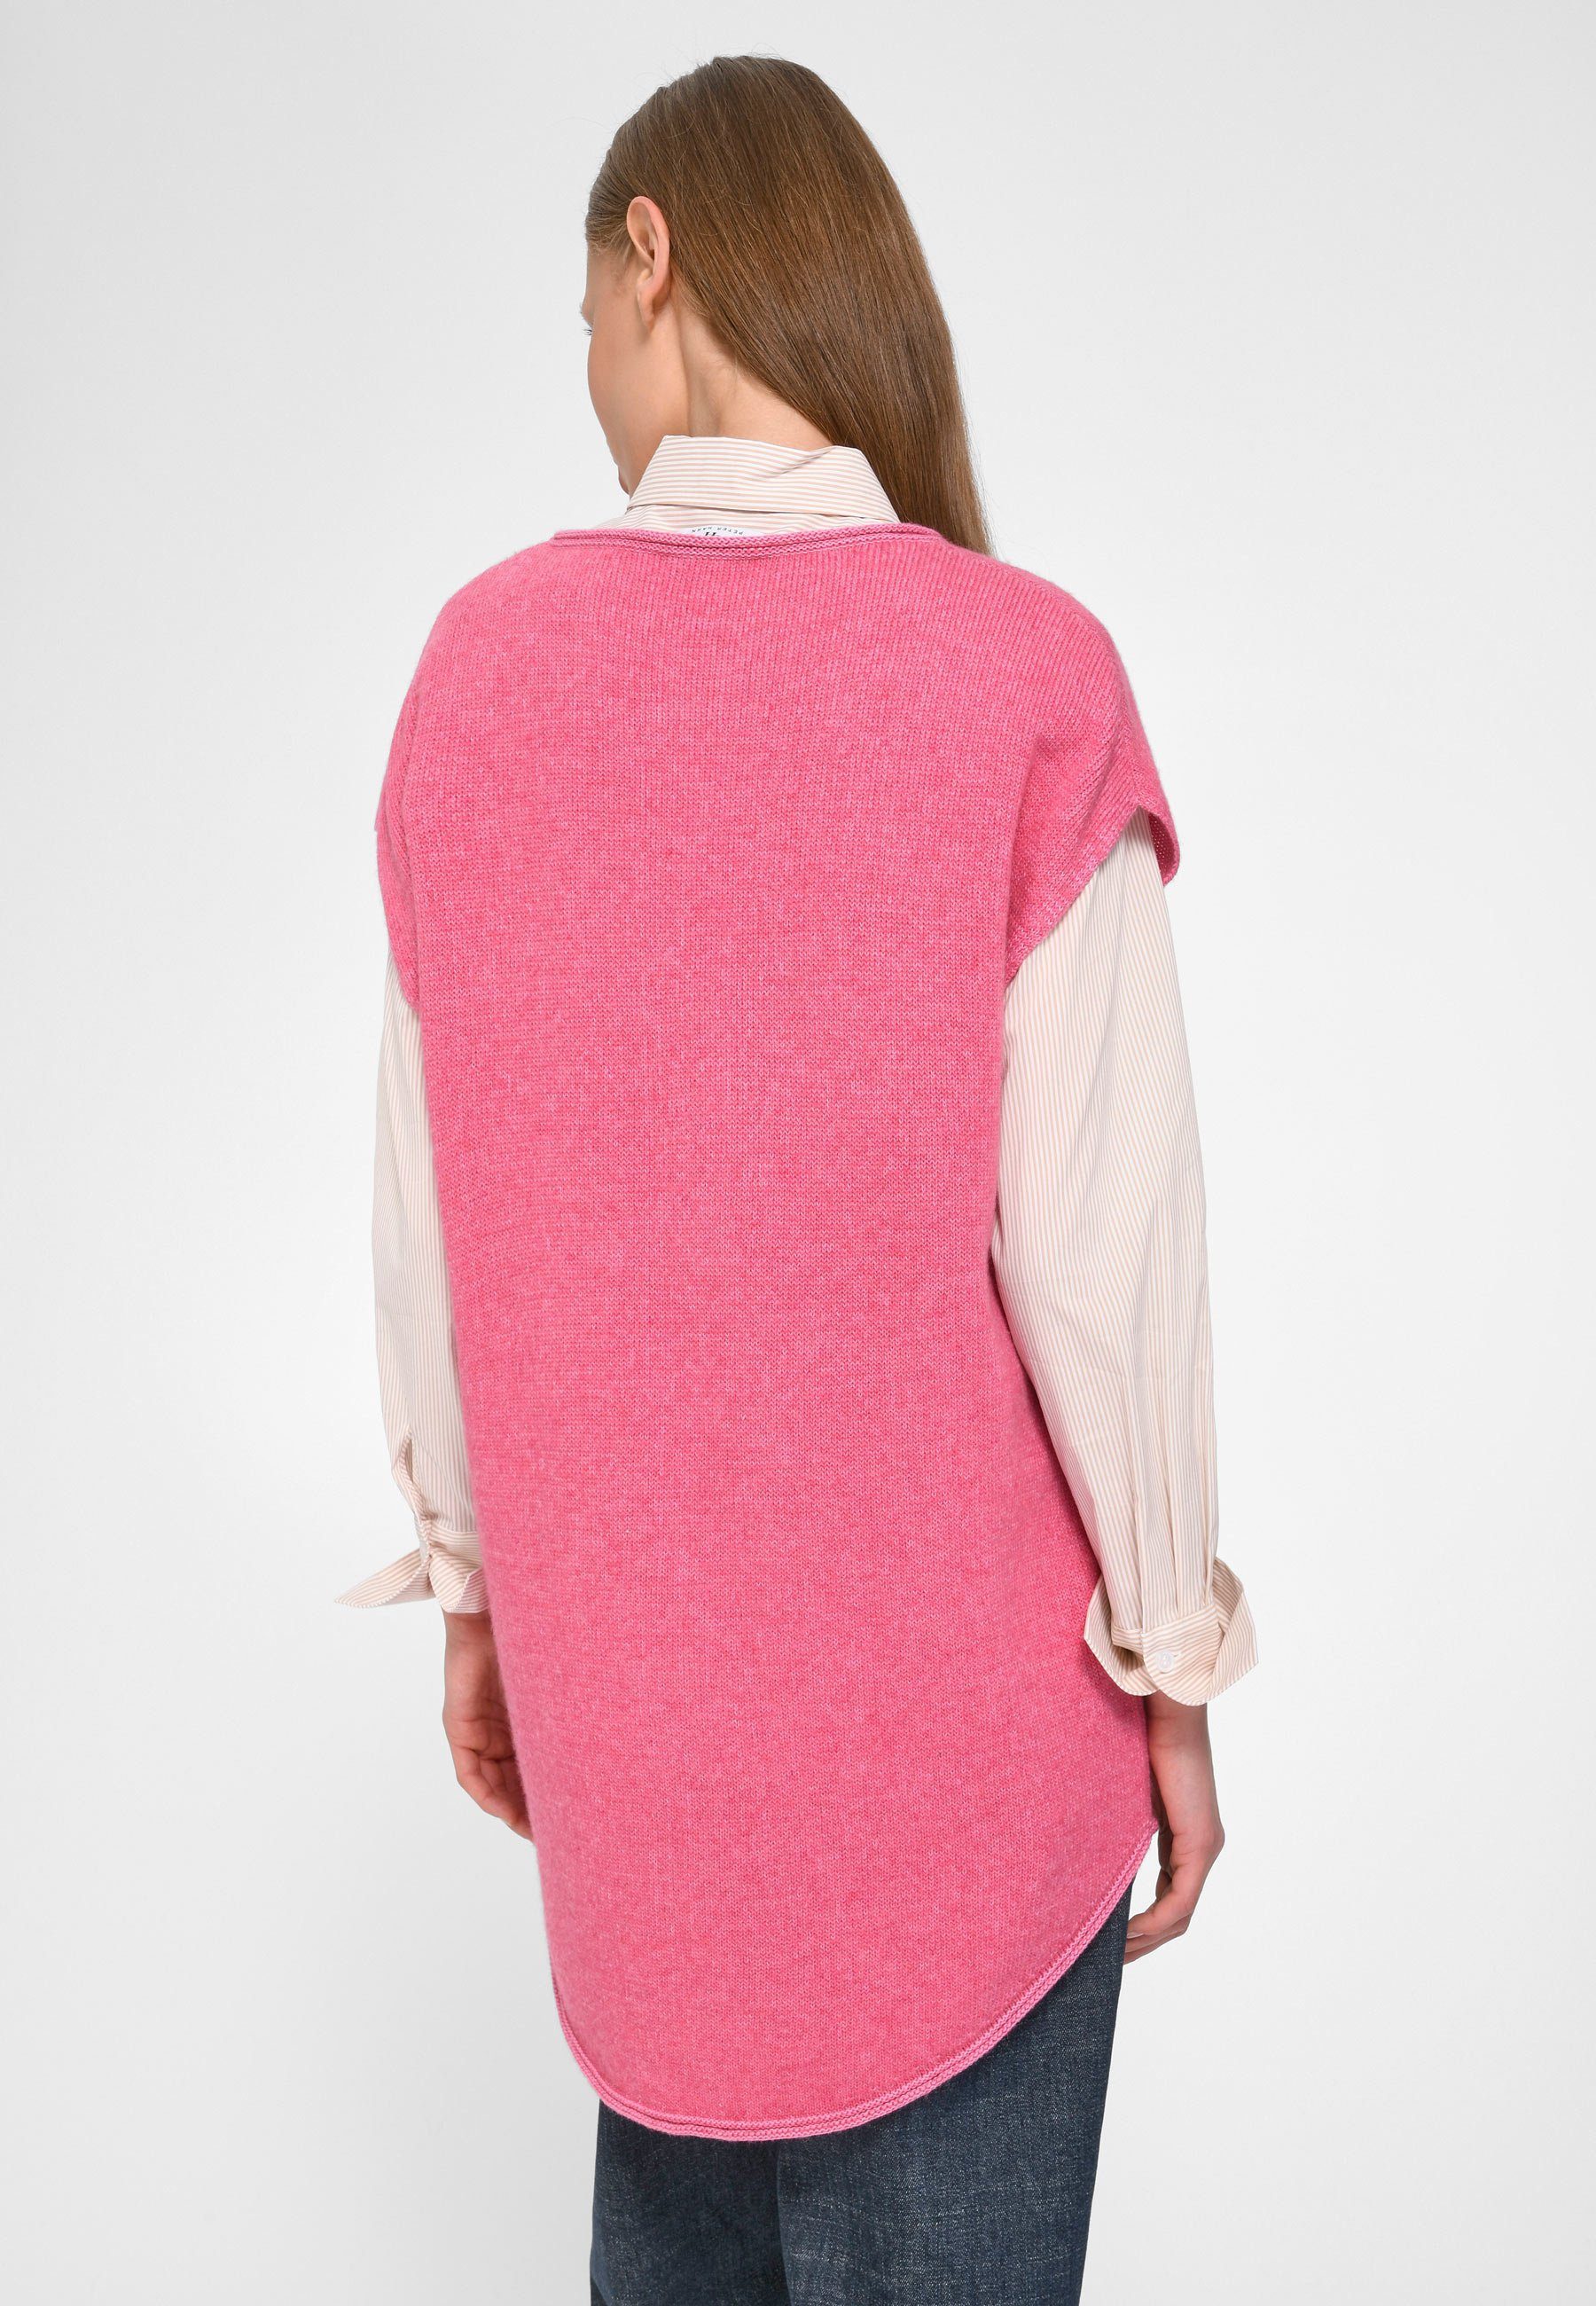 Design New Strickpullover Hahn Peter Wool modernem mit pinkmeliert